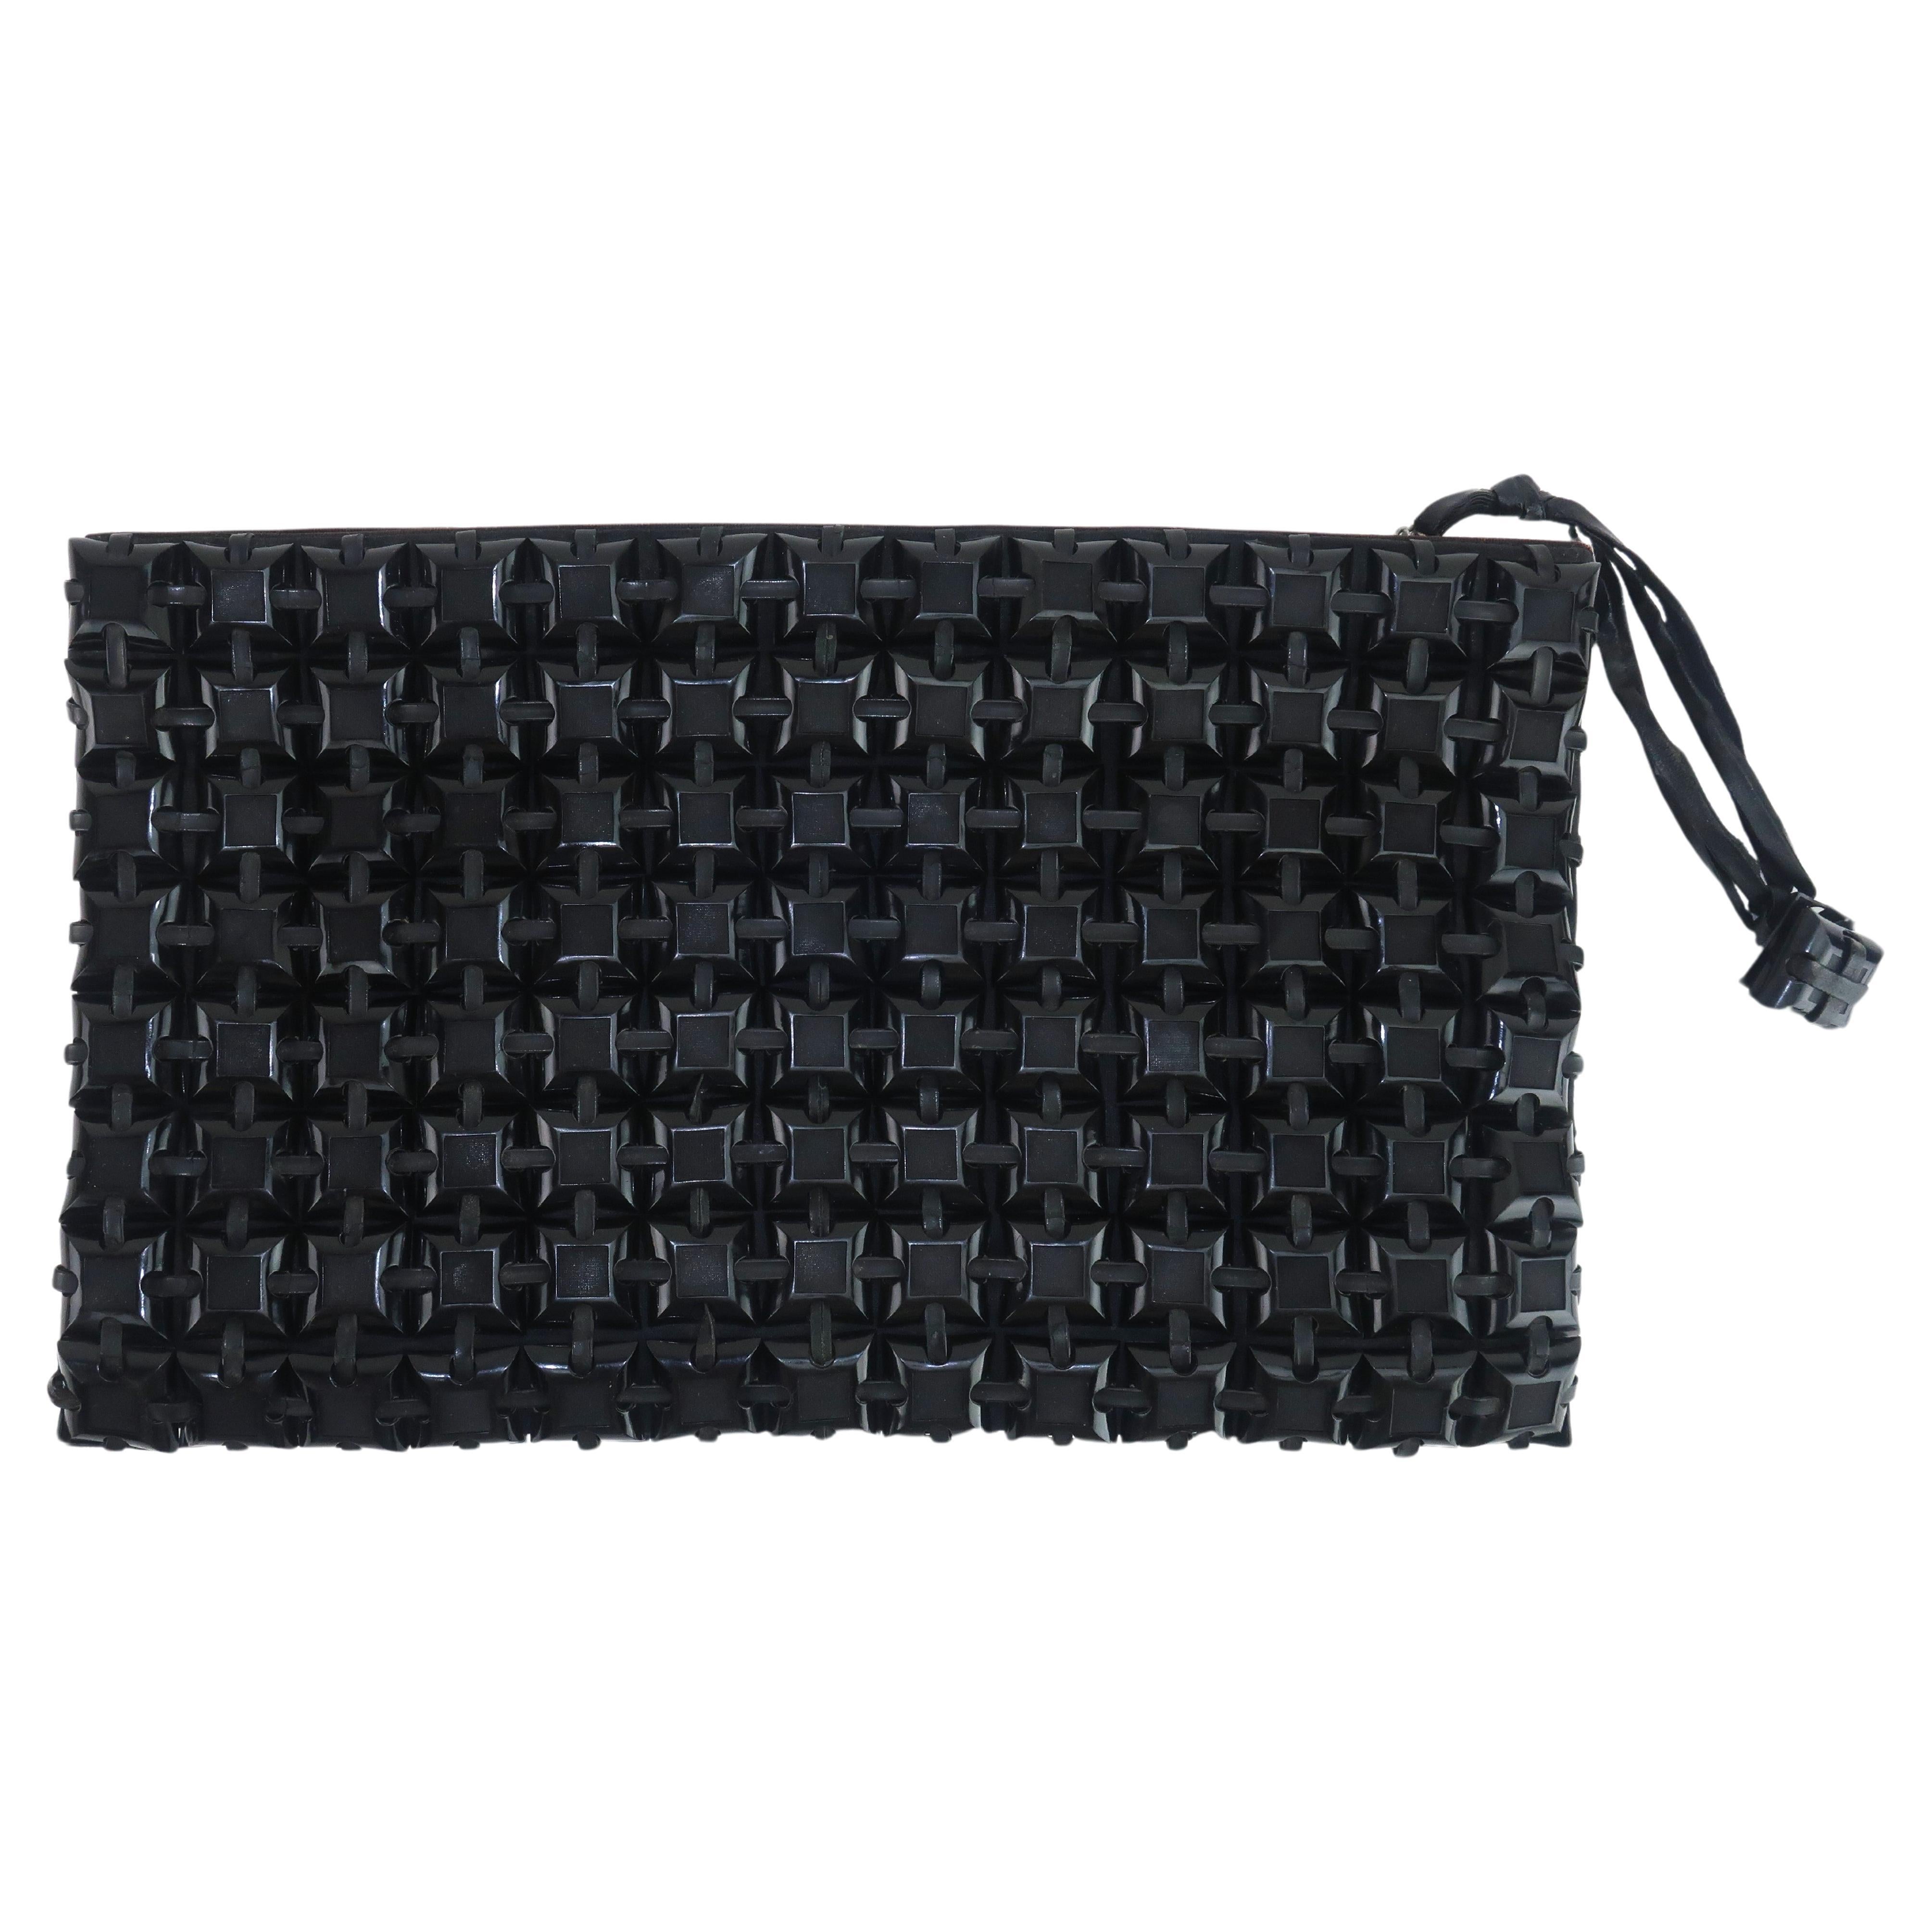 Black Plasticflex Mesh Clutch Handbag, 1940’s